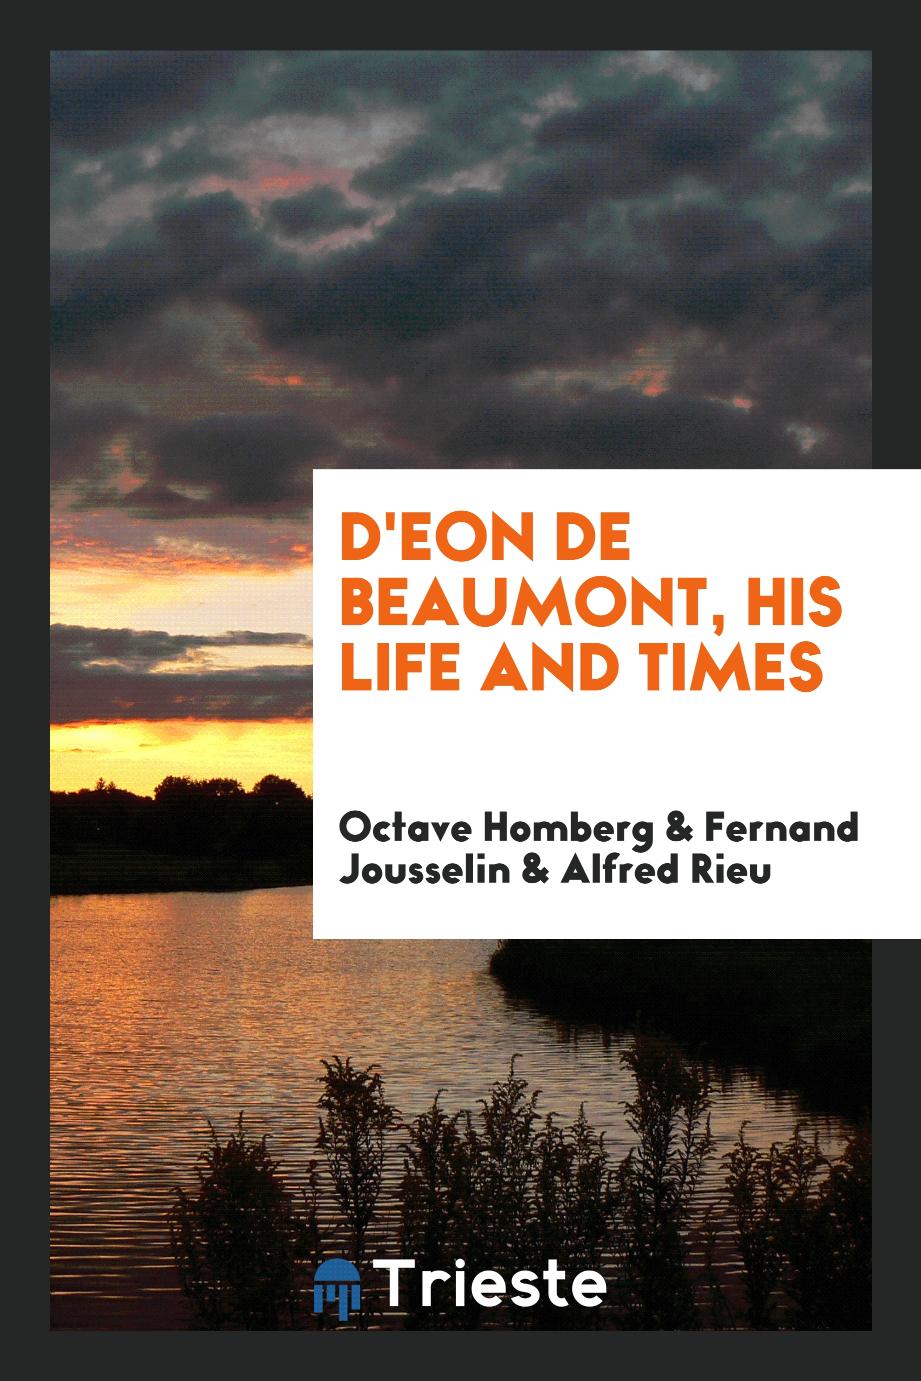 D'Eon de Beaumont, his life and times